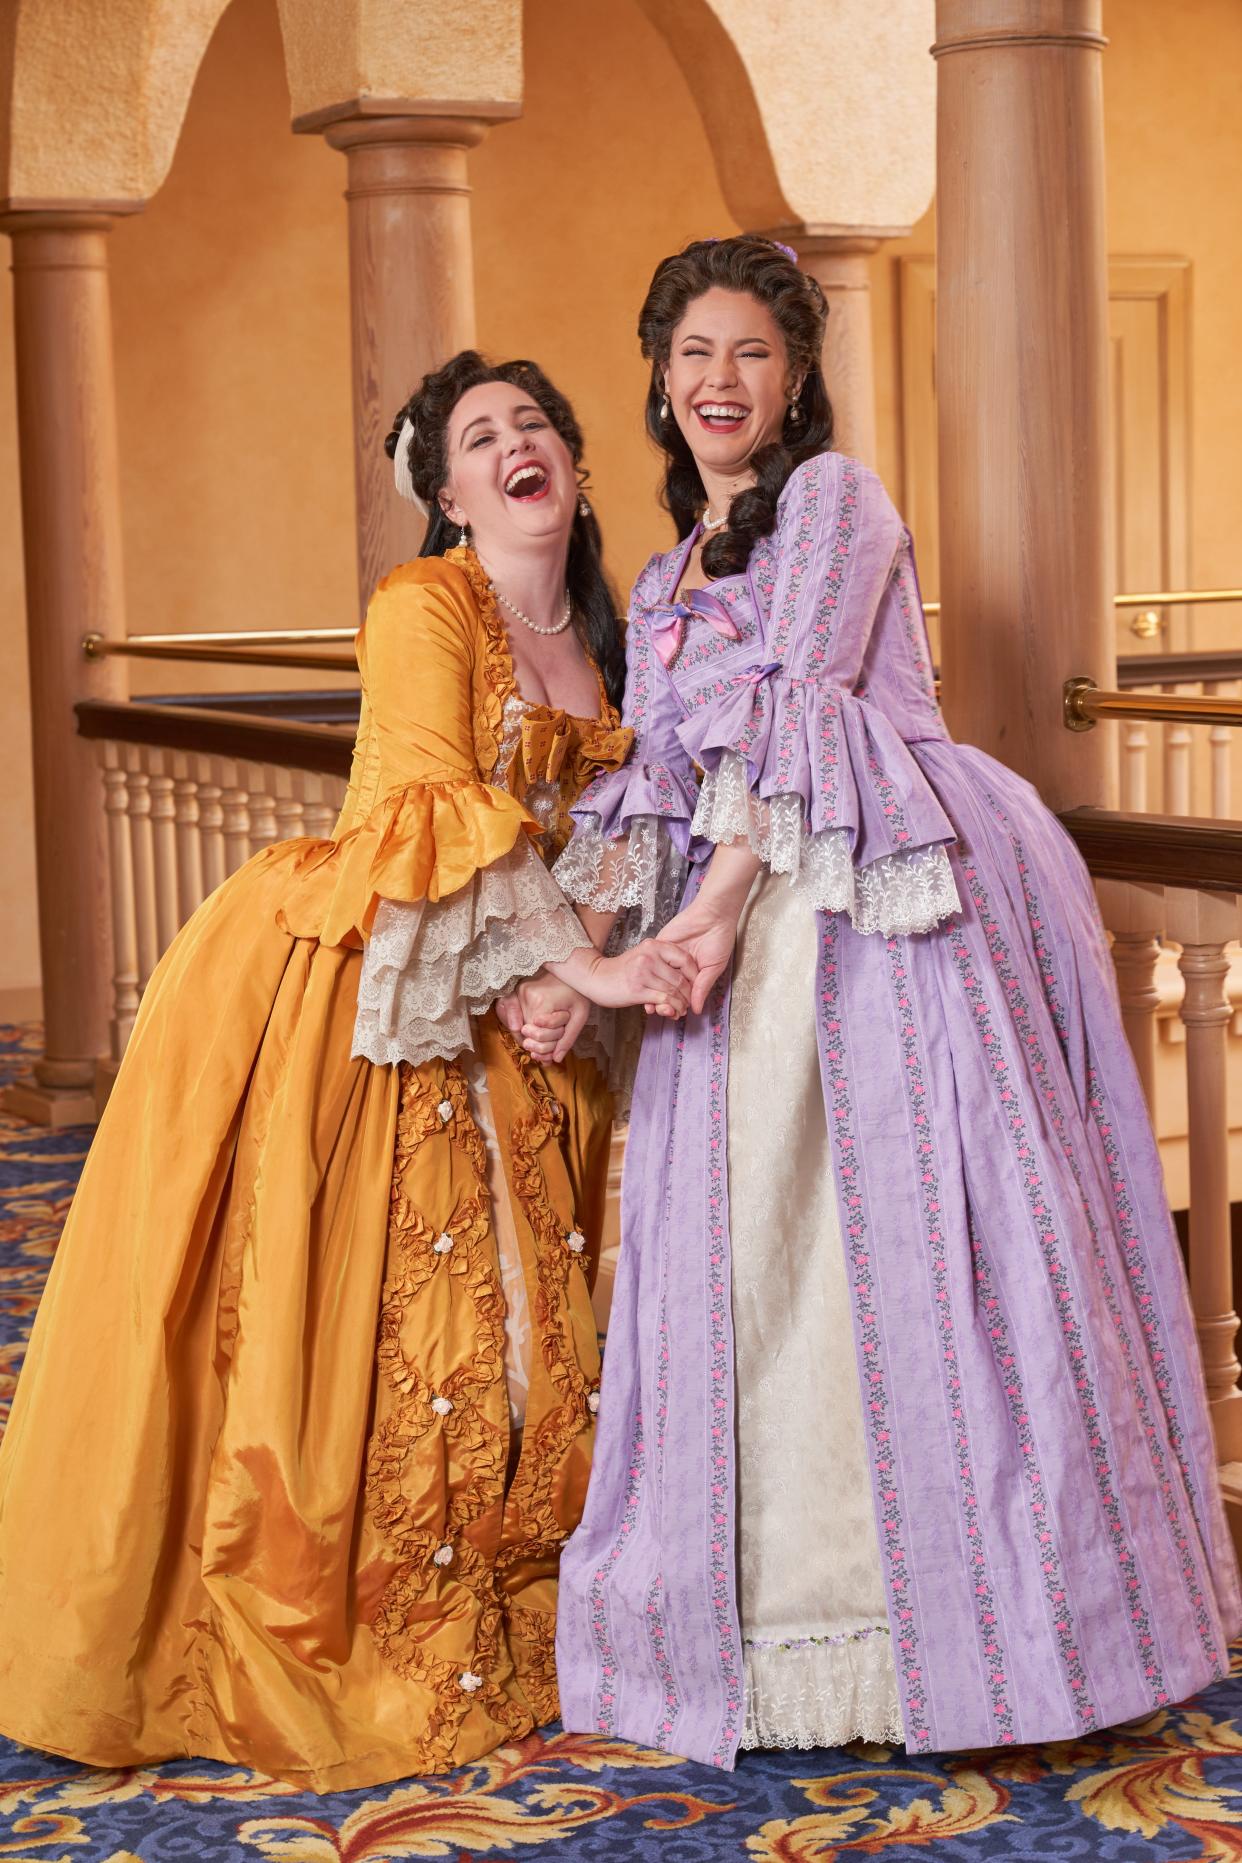 Brenna Markey as Elisetta and Hanna Brammer as Carolina in the Sarasota Opera production of “The Secret Marriage.”